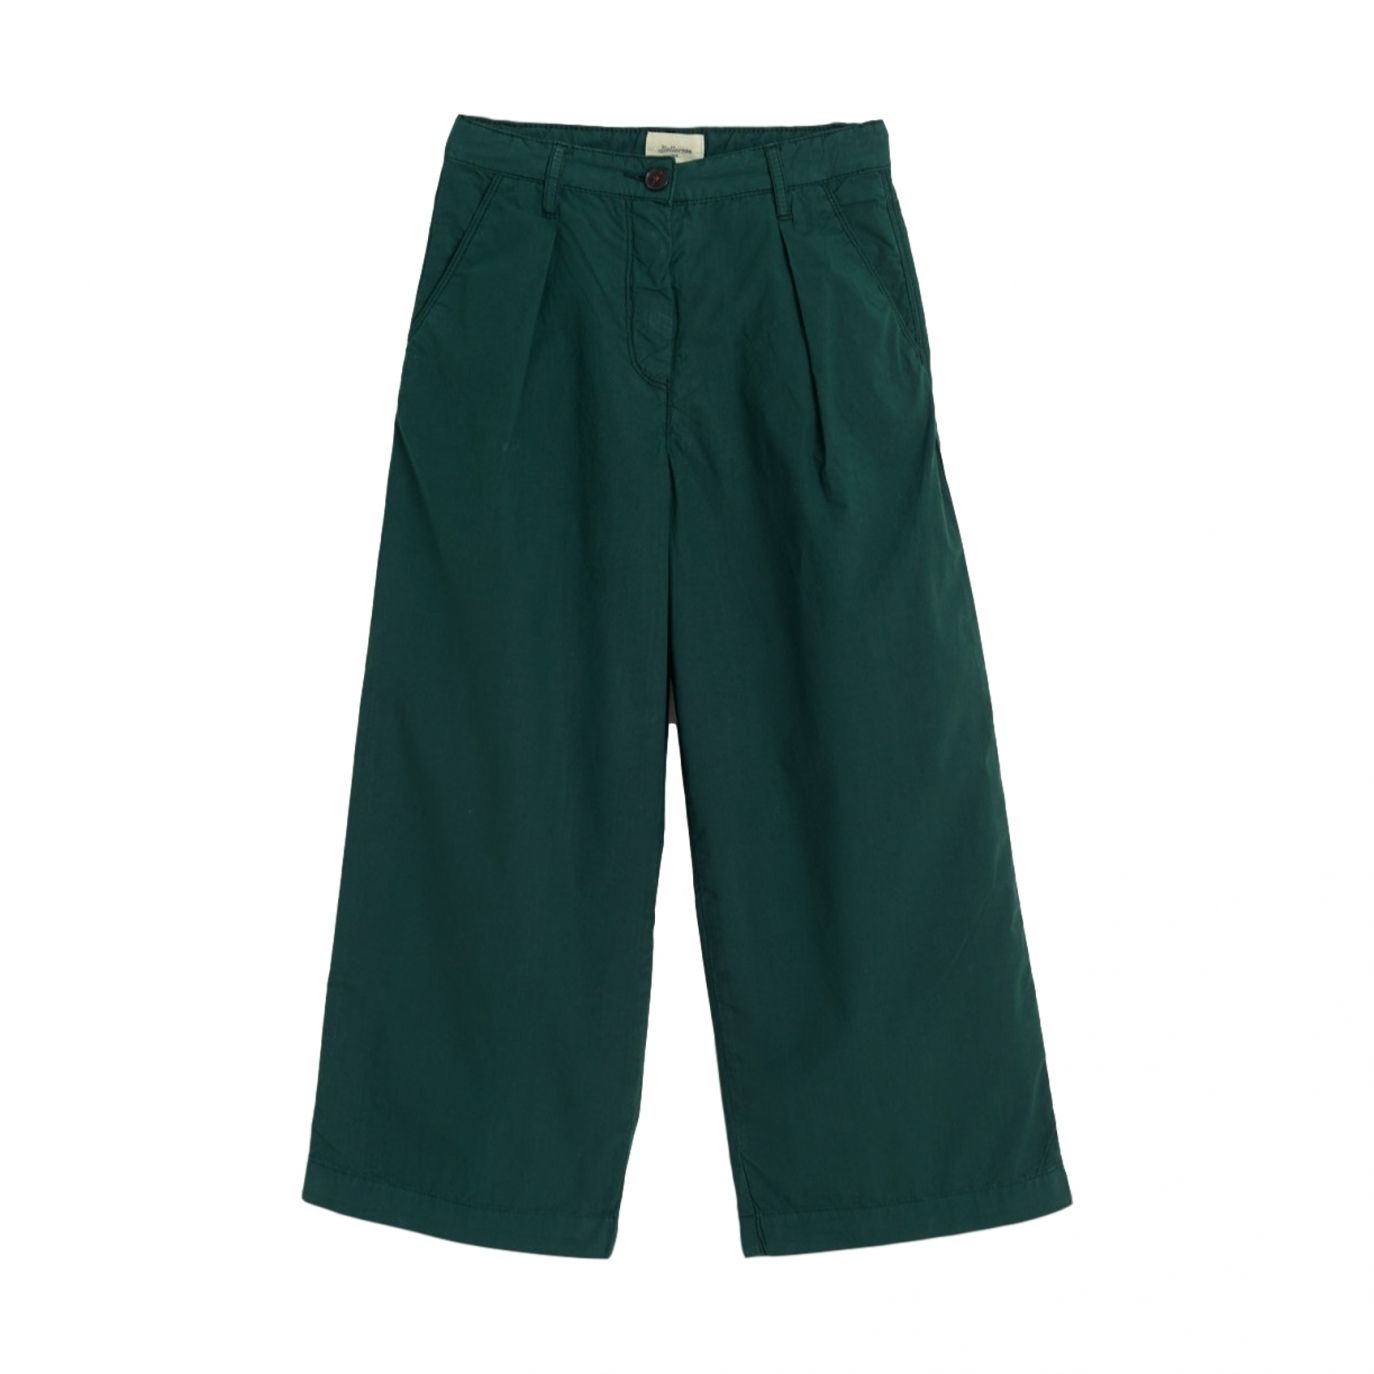 Bellerose - Spodnie Papa201 zielone - Spodnie i leginsy - BK201101 R0740 